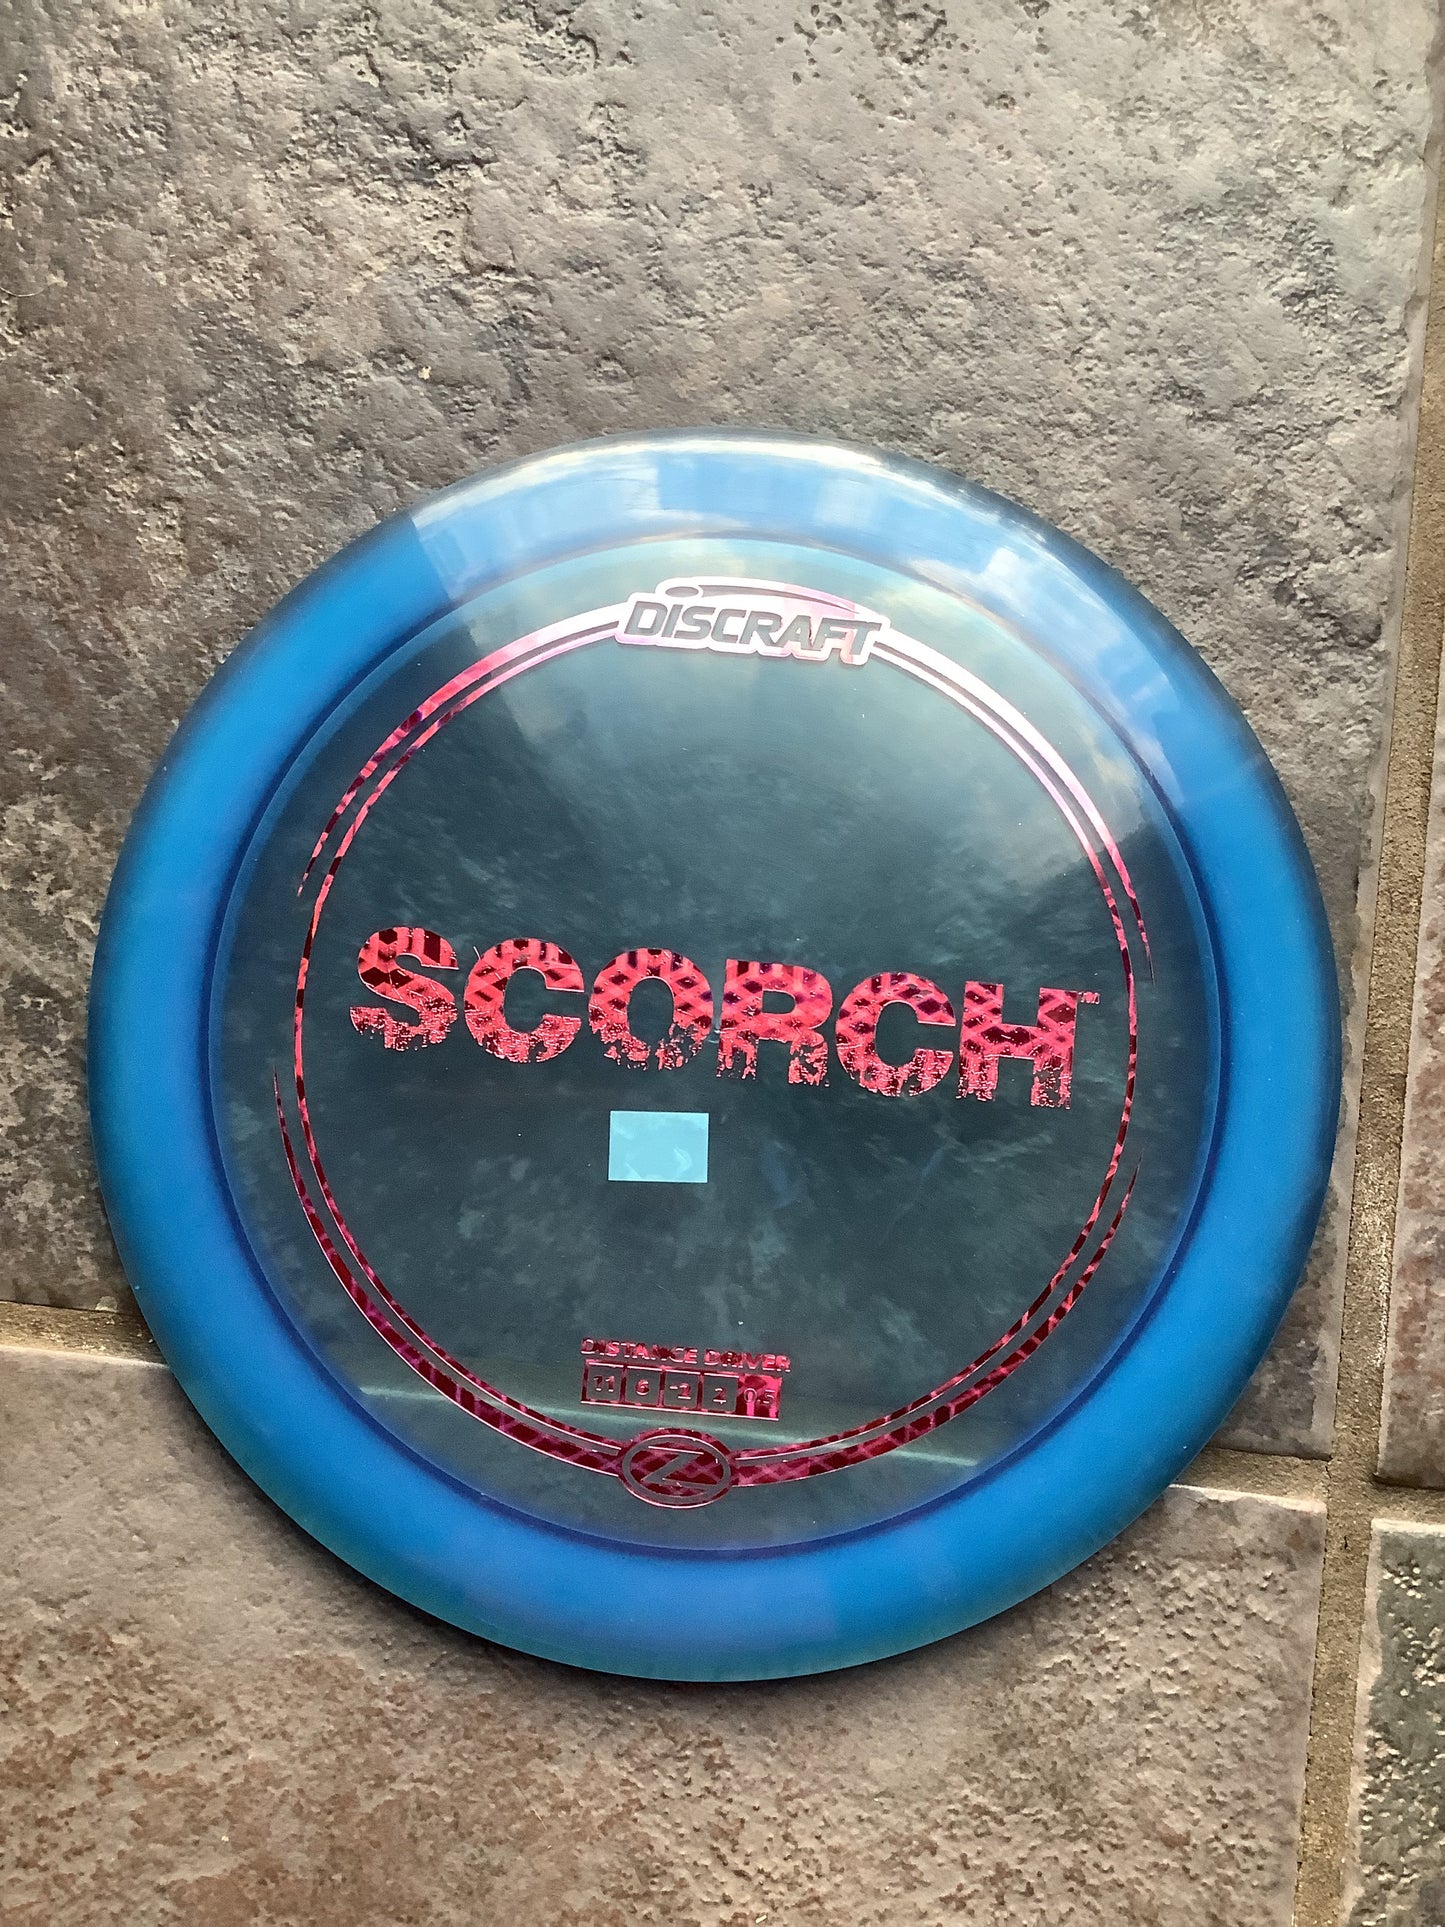 Discraft Z Scorch  no weight shown weighs 176 Grams (SC12)